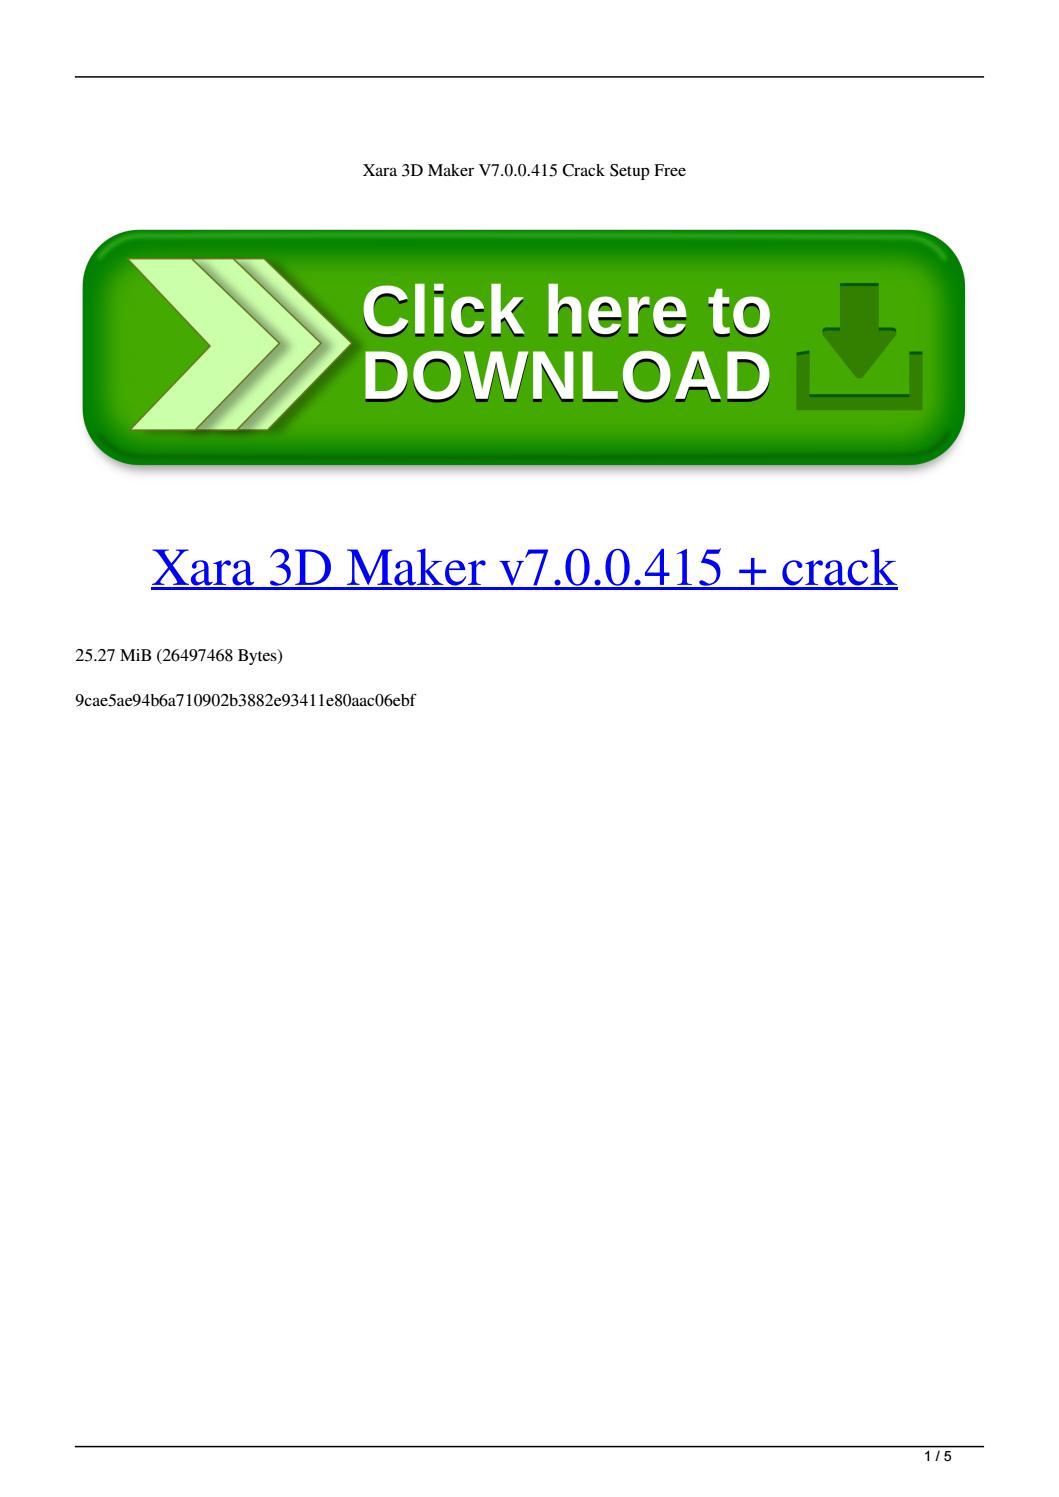 xara 3d free download full version with crack